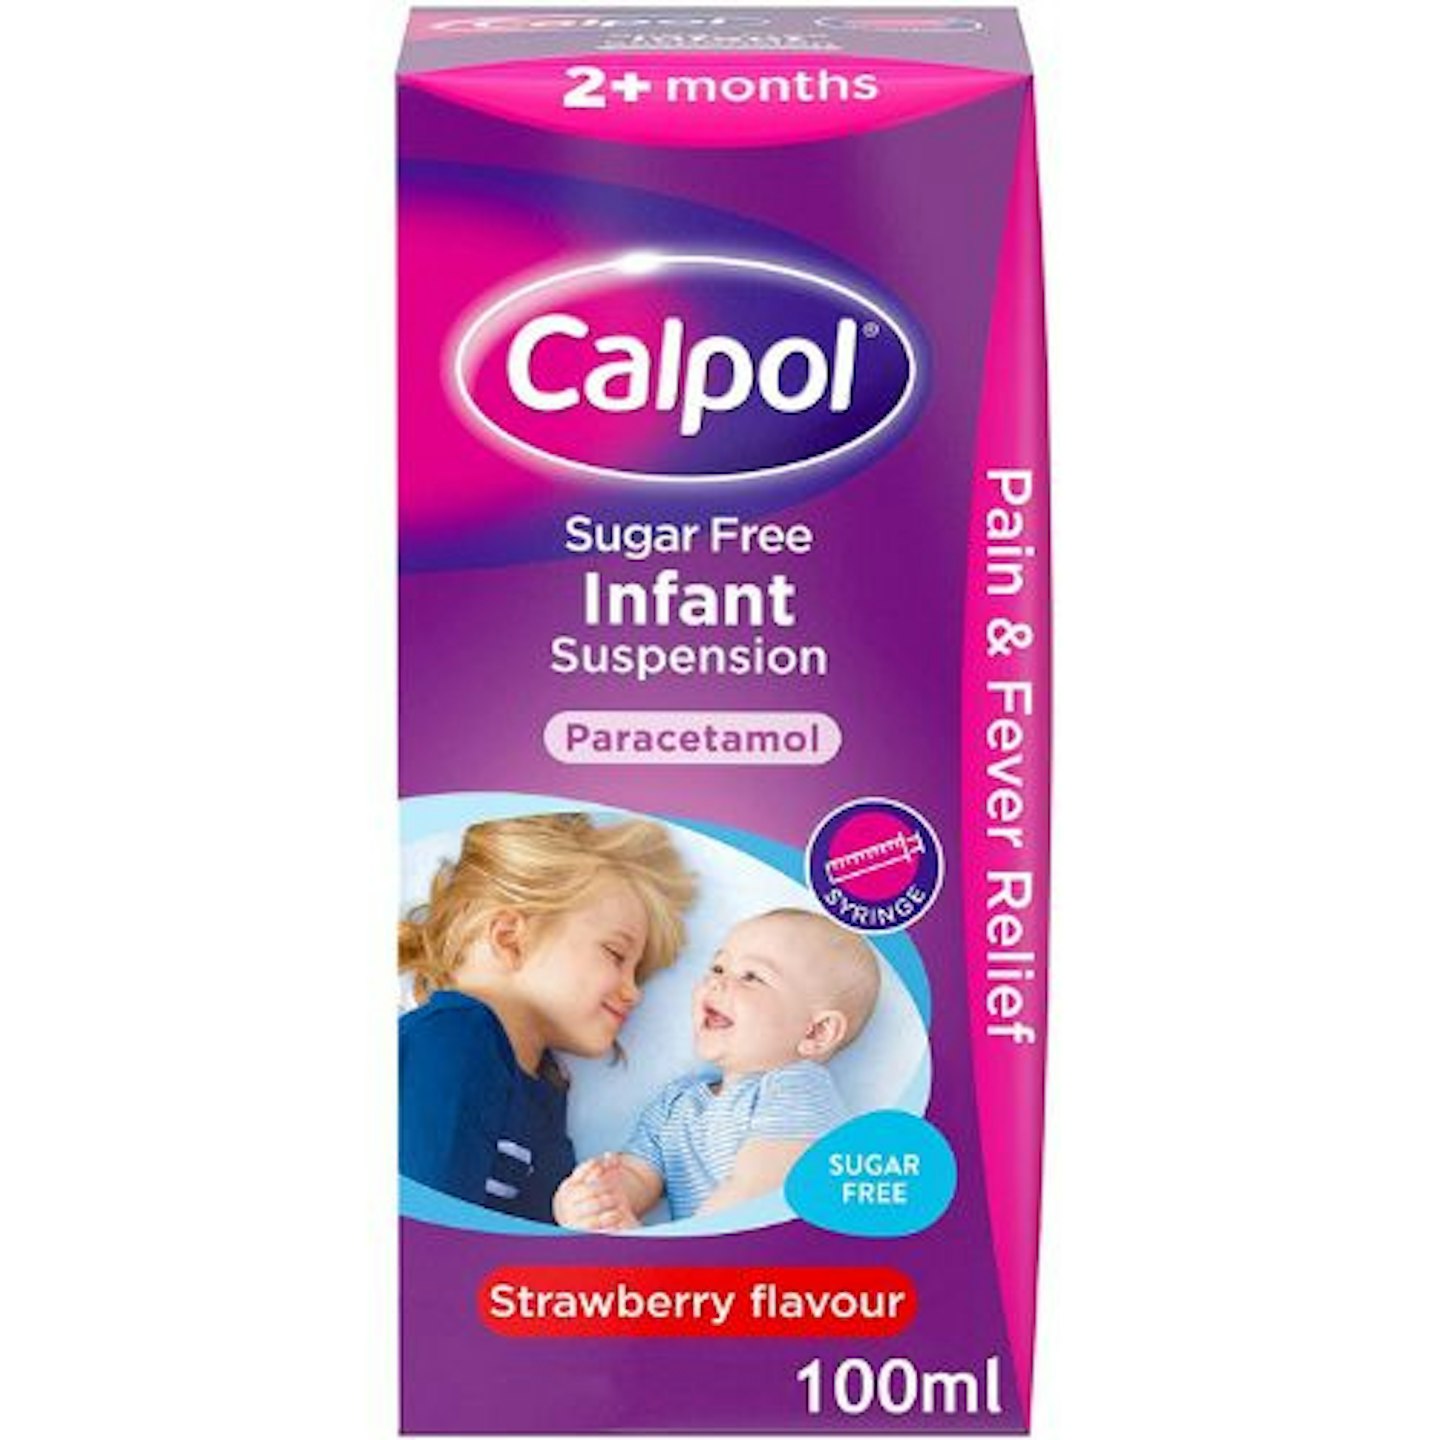 Calpol Sugar Free Infant Suspension Medication